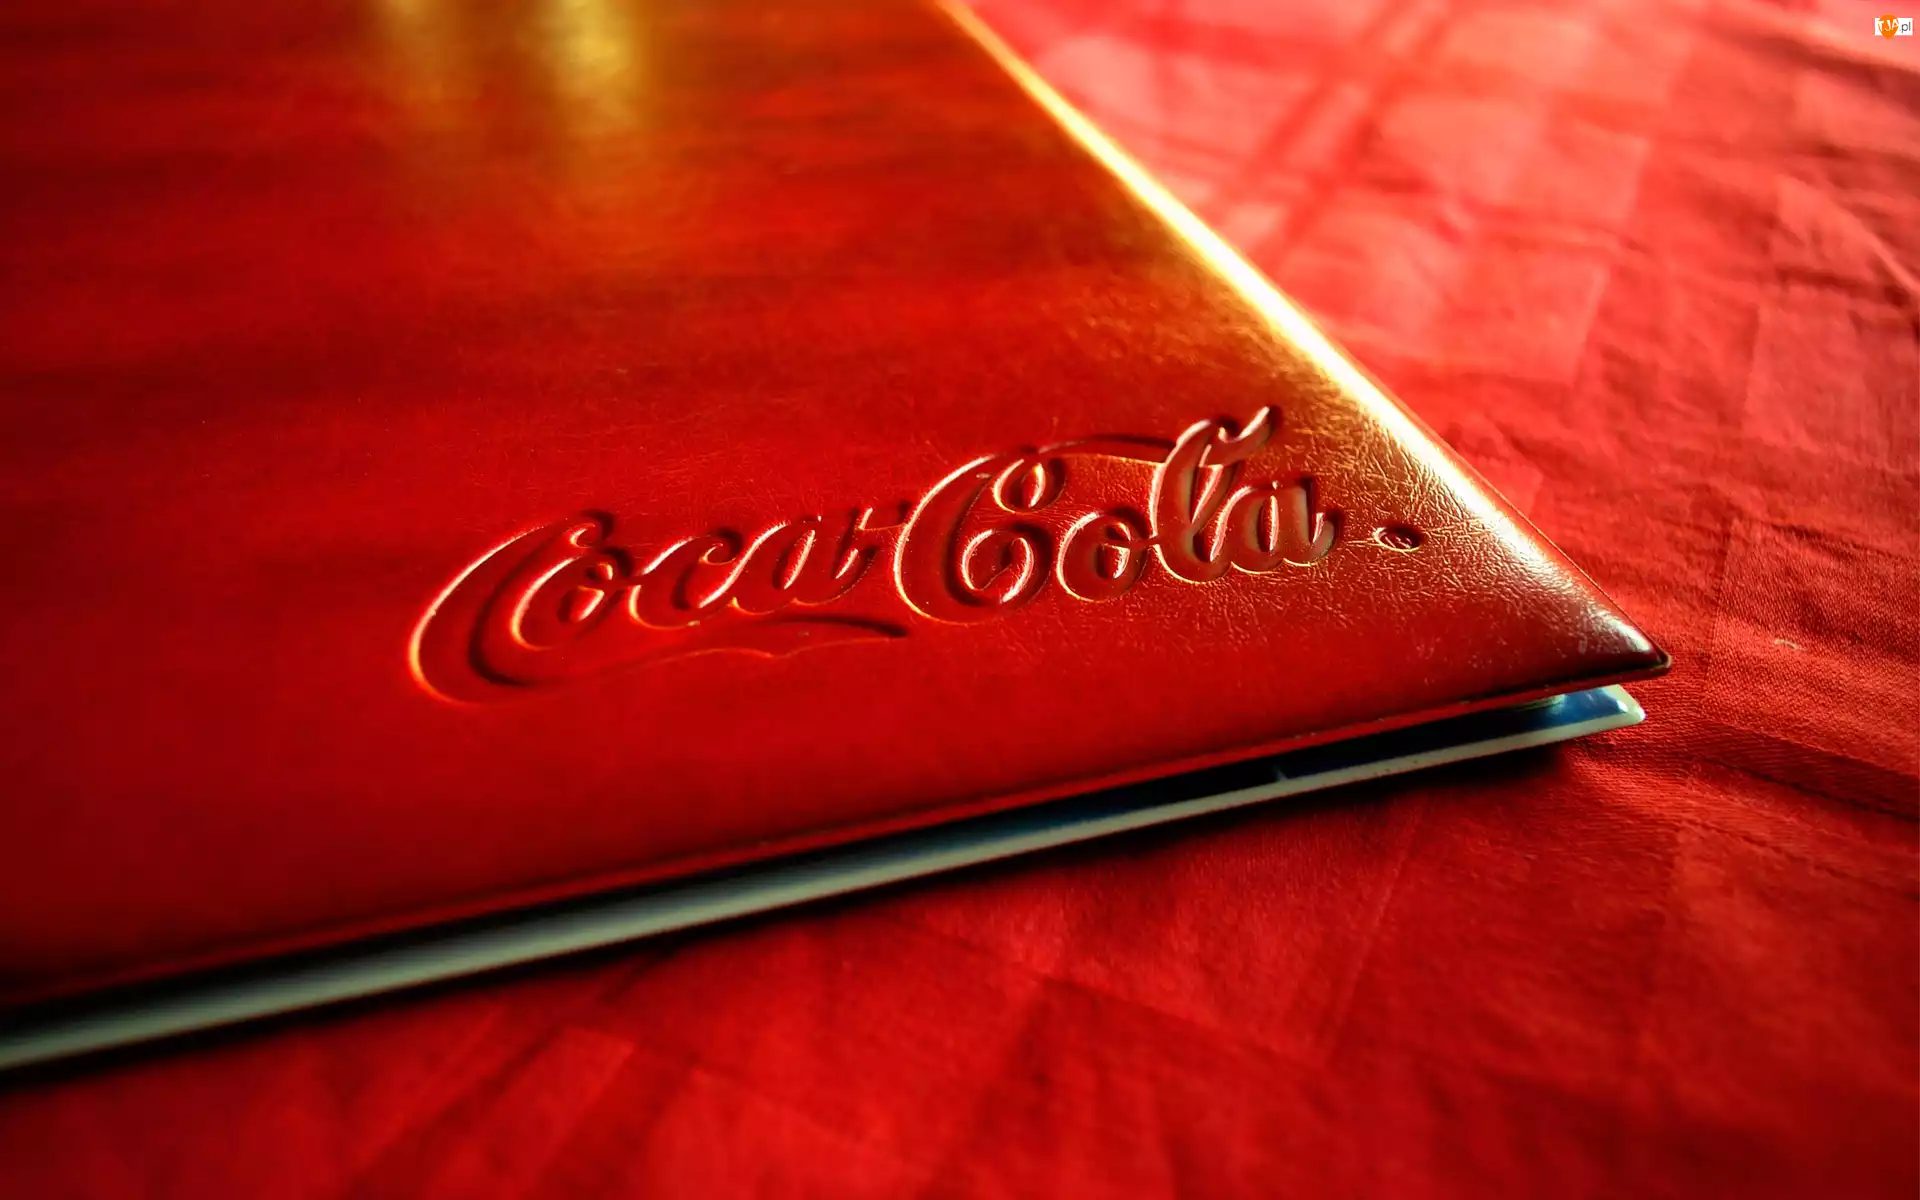 Coca Cola, Czerwona Książka, Napis